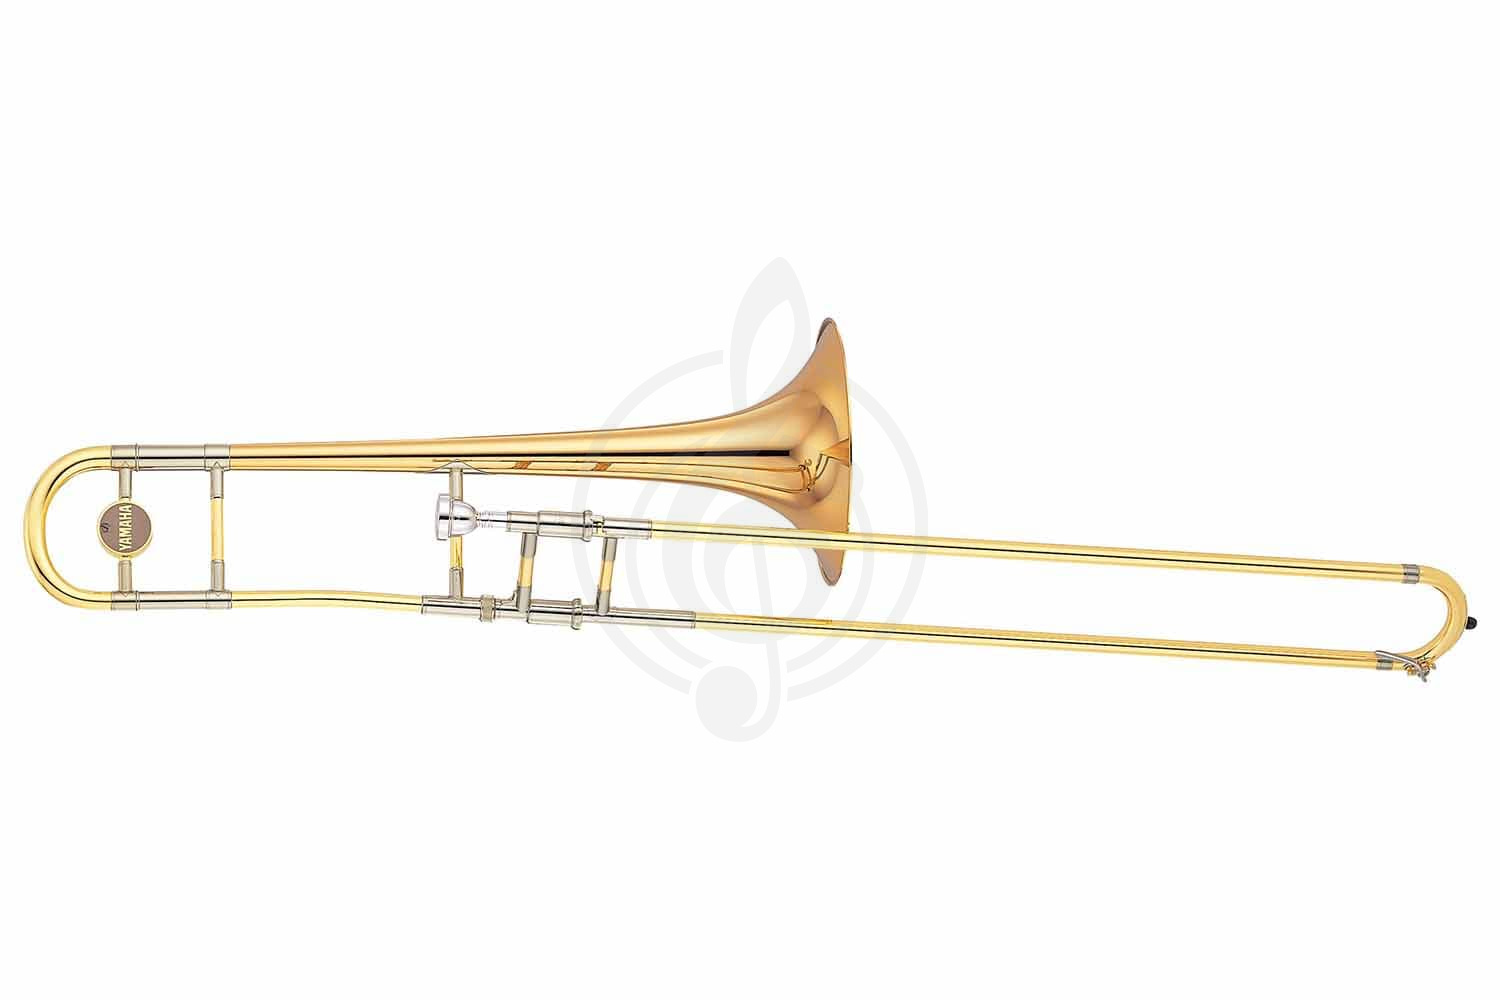 Тромбон Тромбоны Yamaha Yamaha YSL-881G- тромбон тенор Bb профессиональный, 13,89/220мм, Gold-brass, чистый лак YSL-881G//02 - фото 1